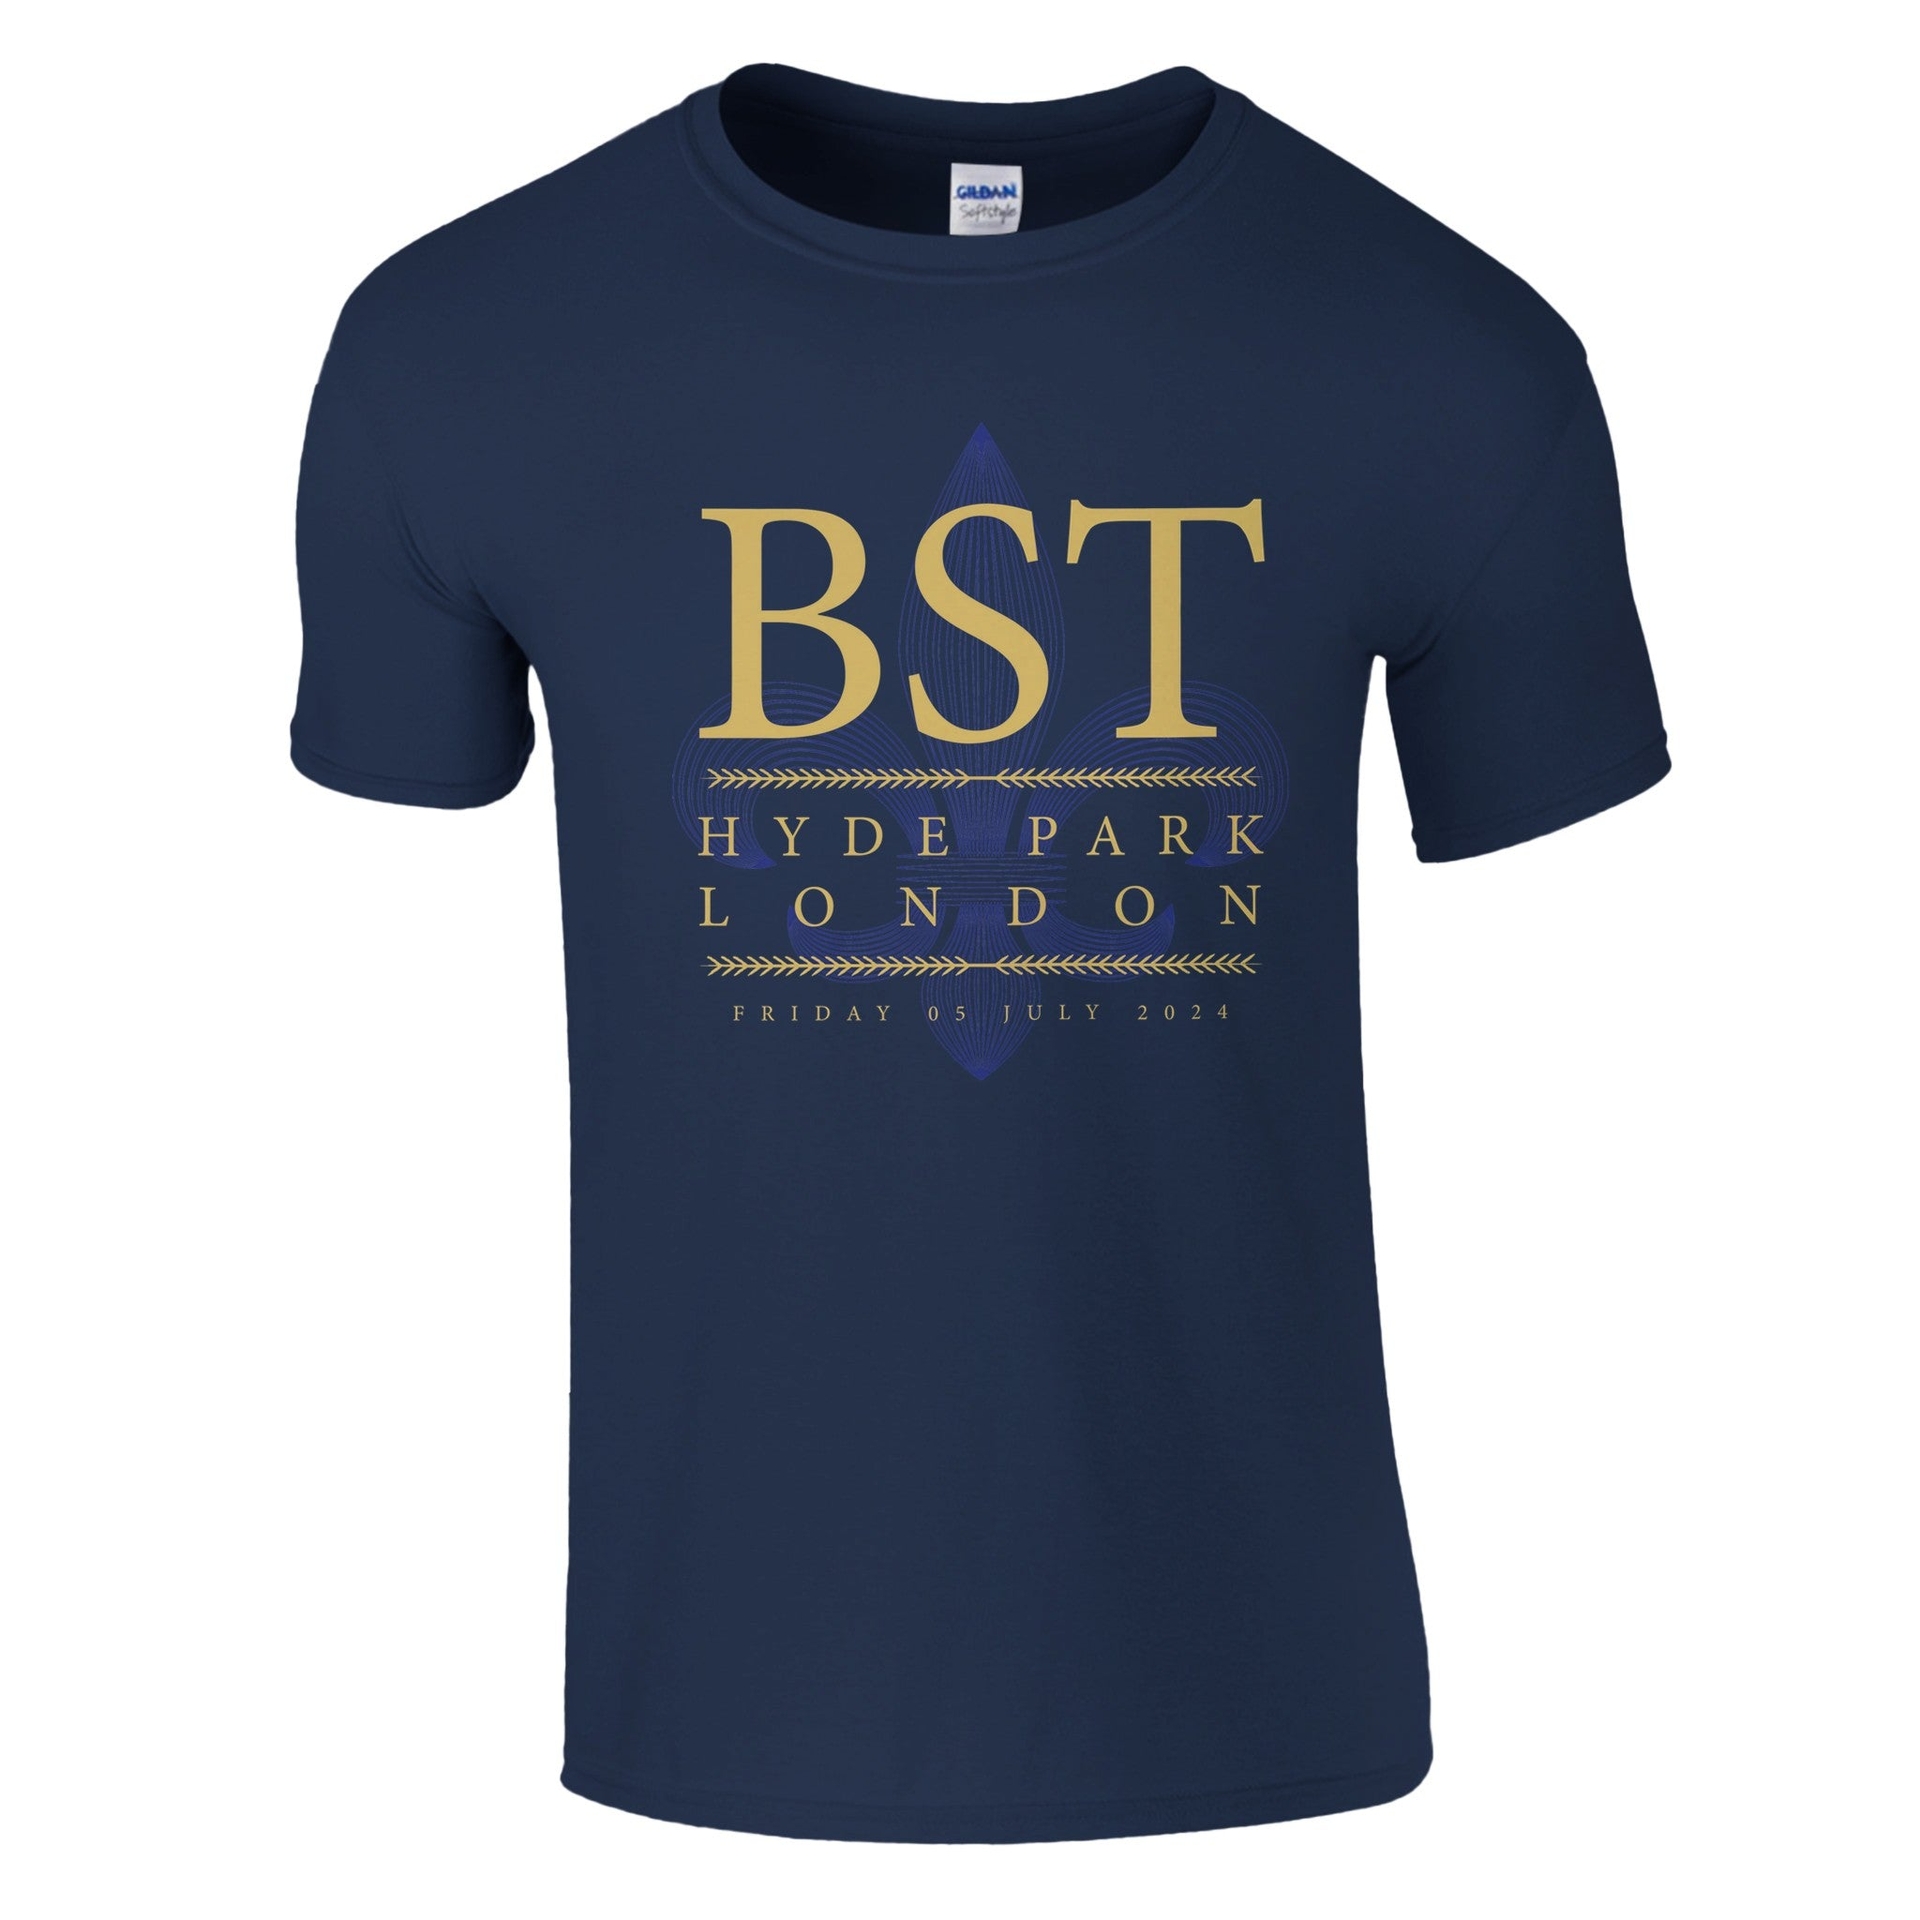 BST Hyde Park Andrea Bocelli Event T-Shirt